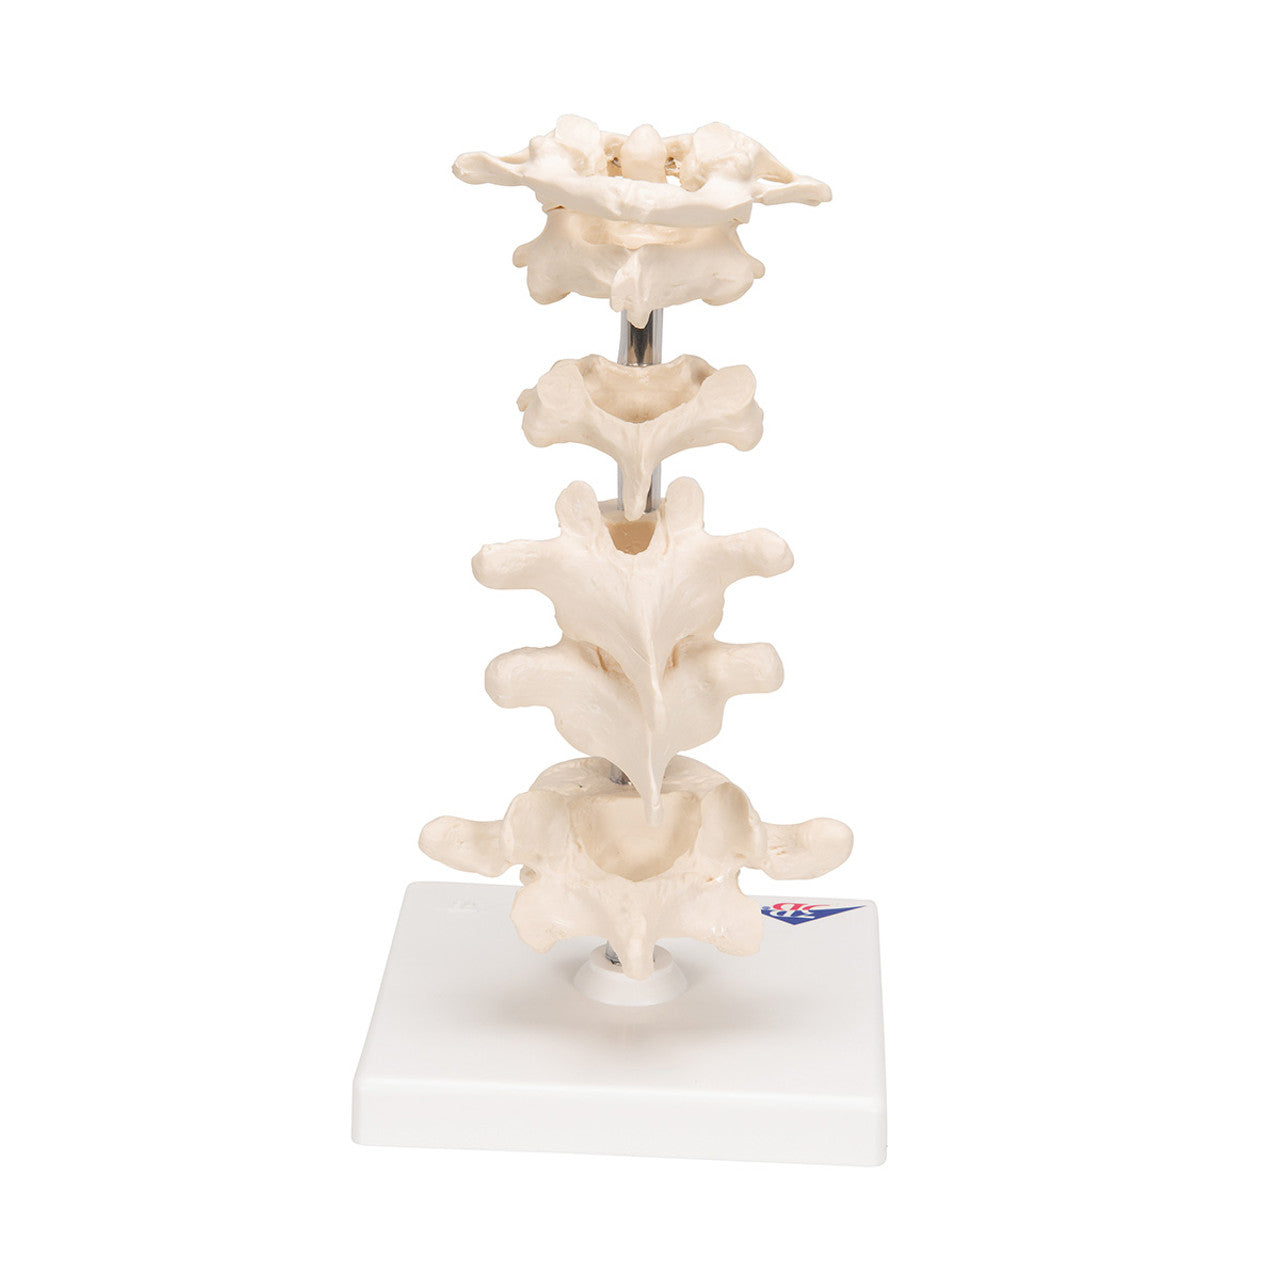 6 piece vertebrae